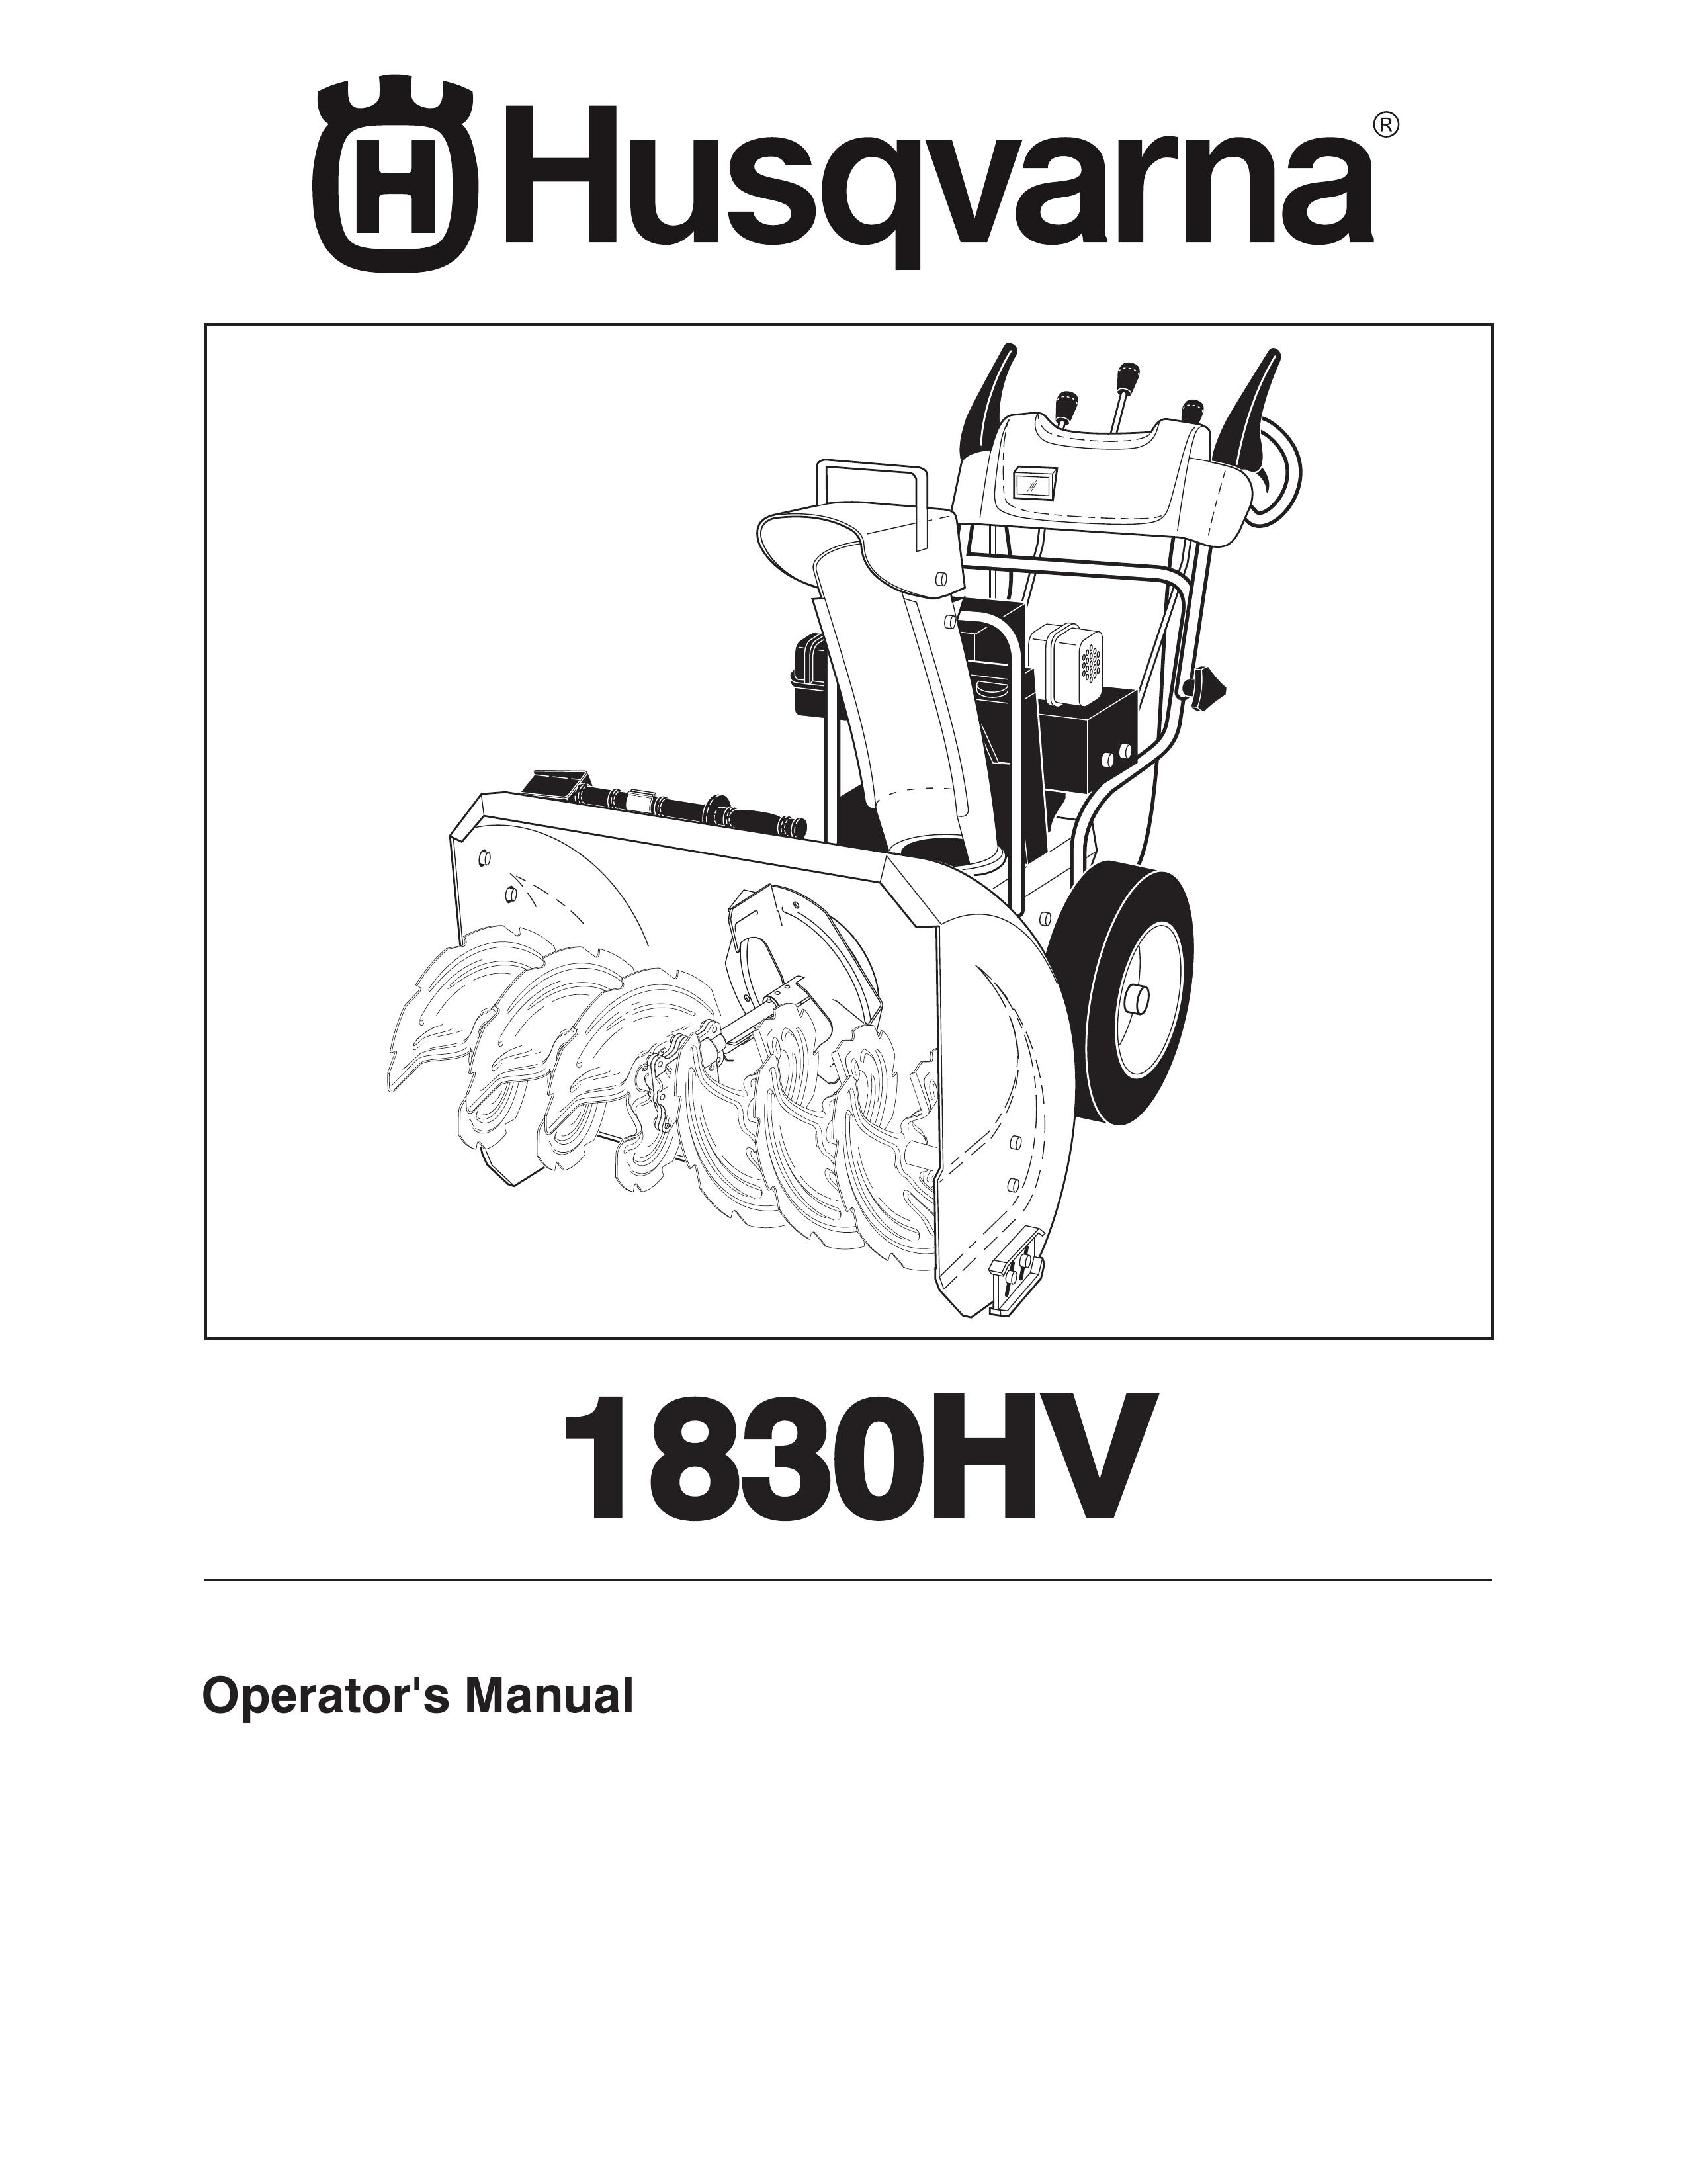 Husqvarna 1830HV Snow Blower User Manual